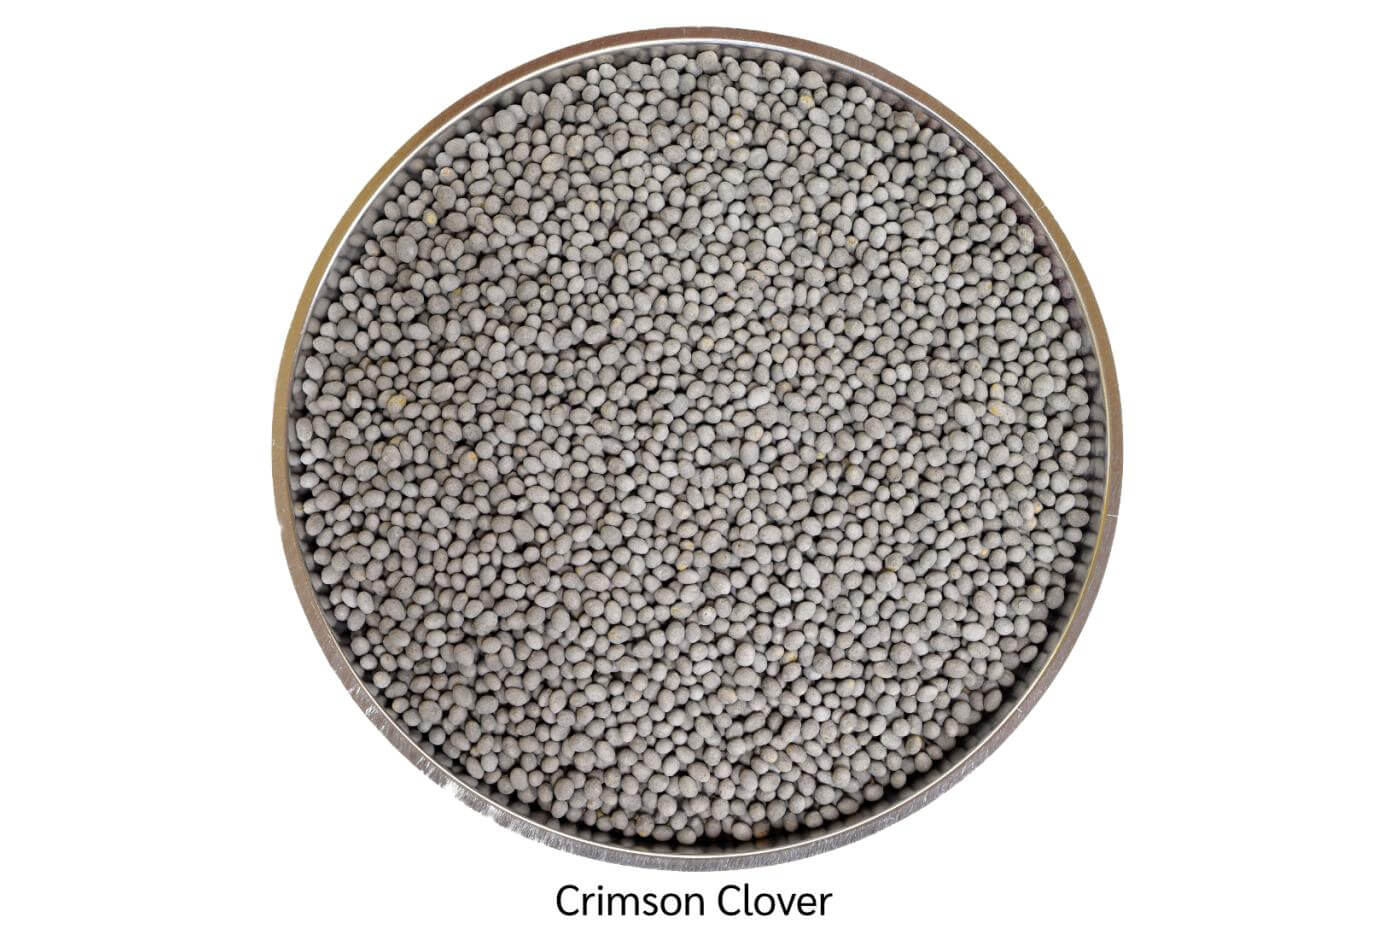 Coated crimson clover seeds